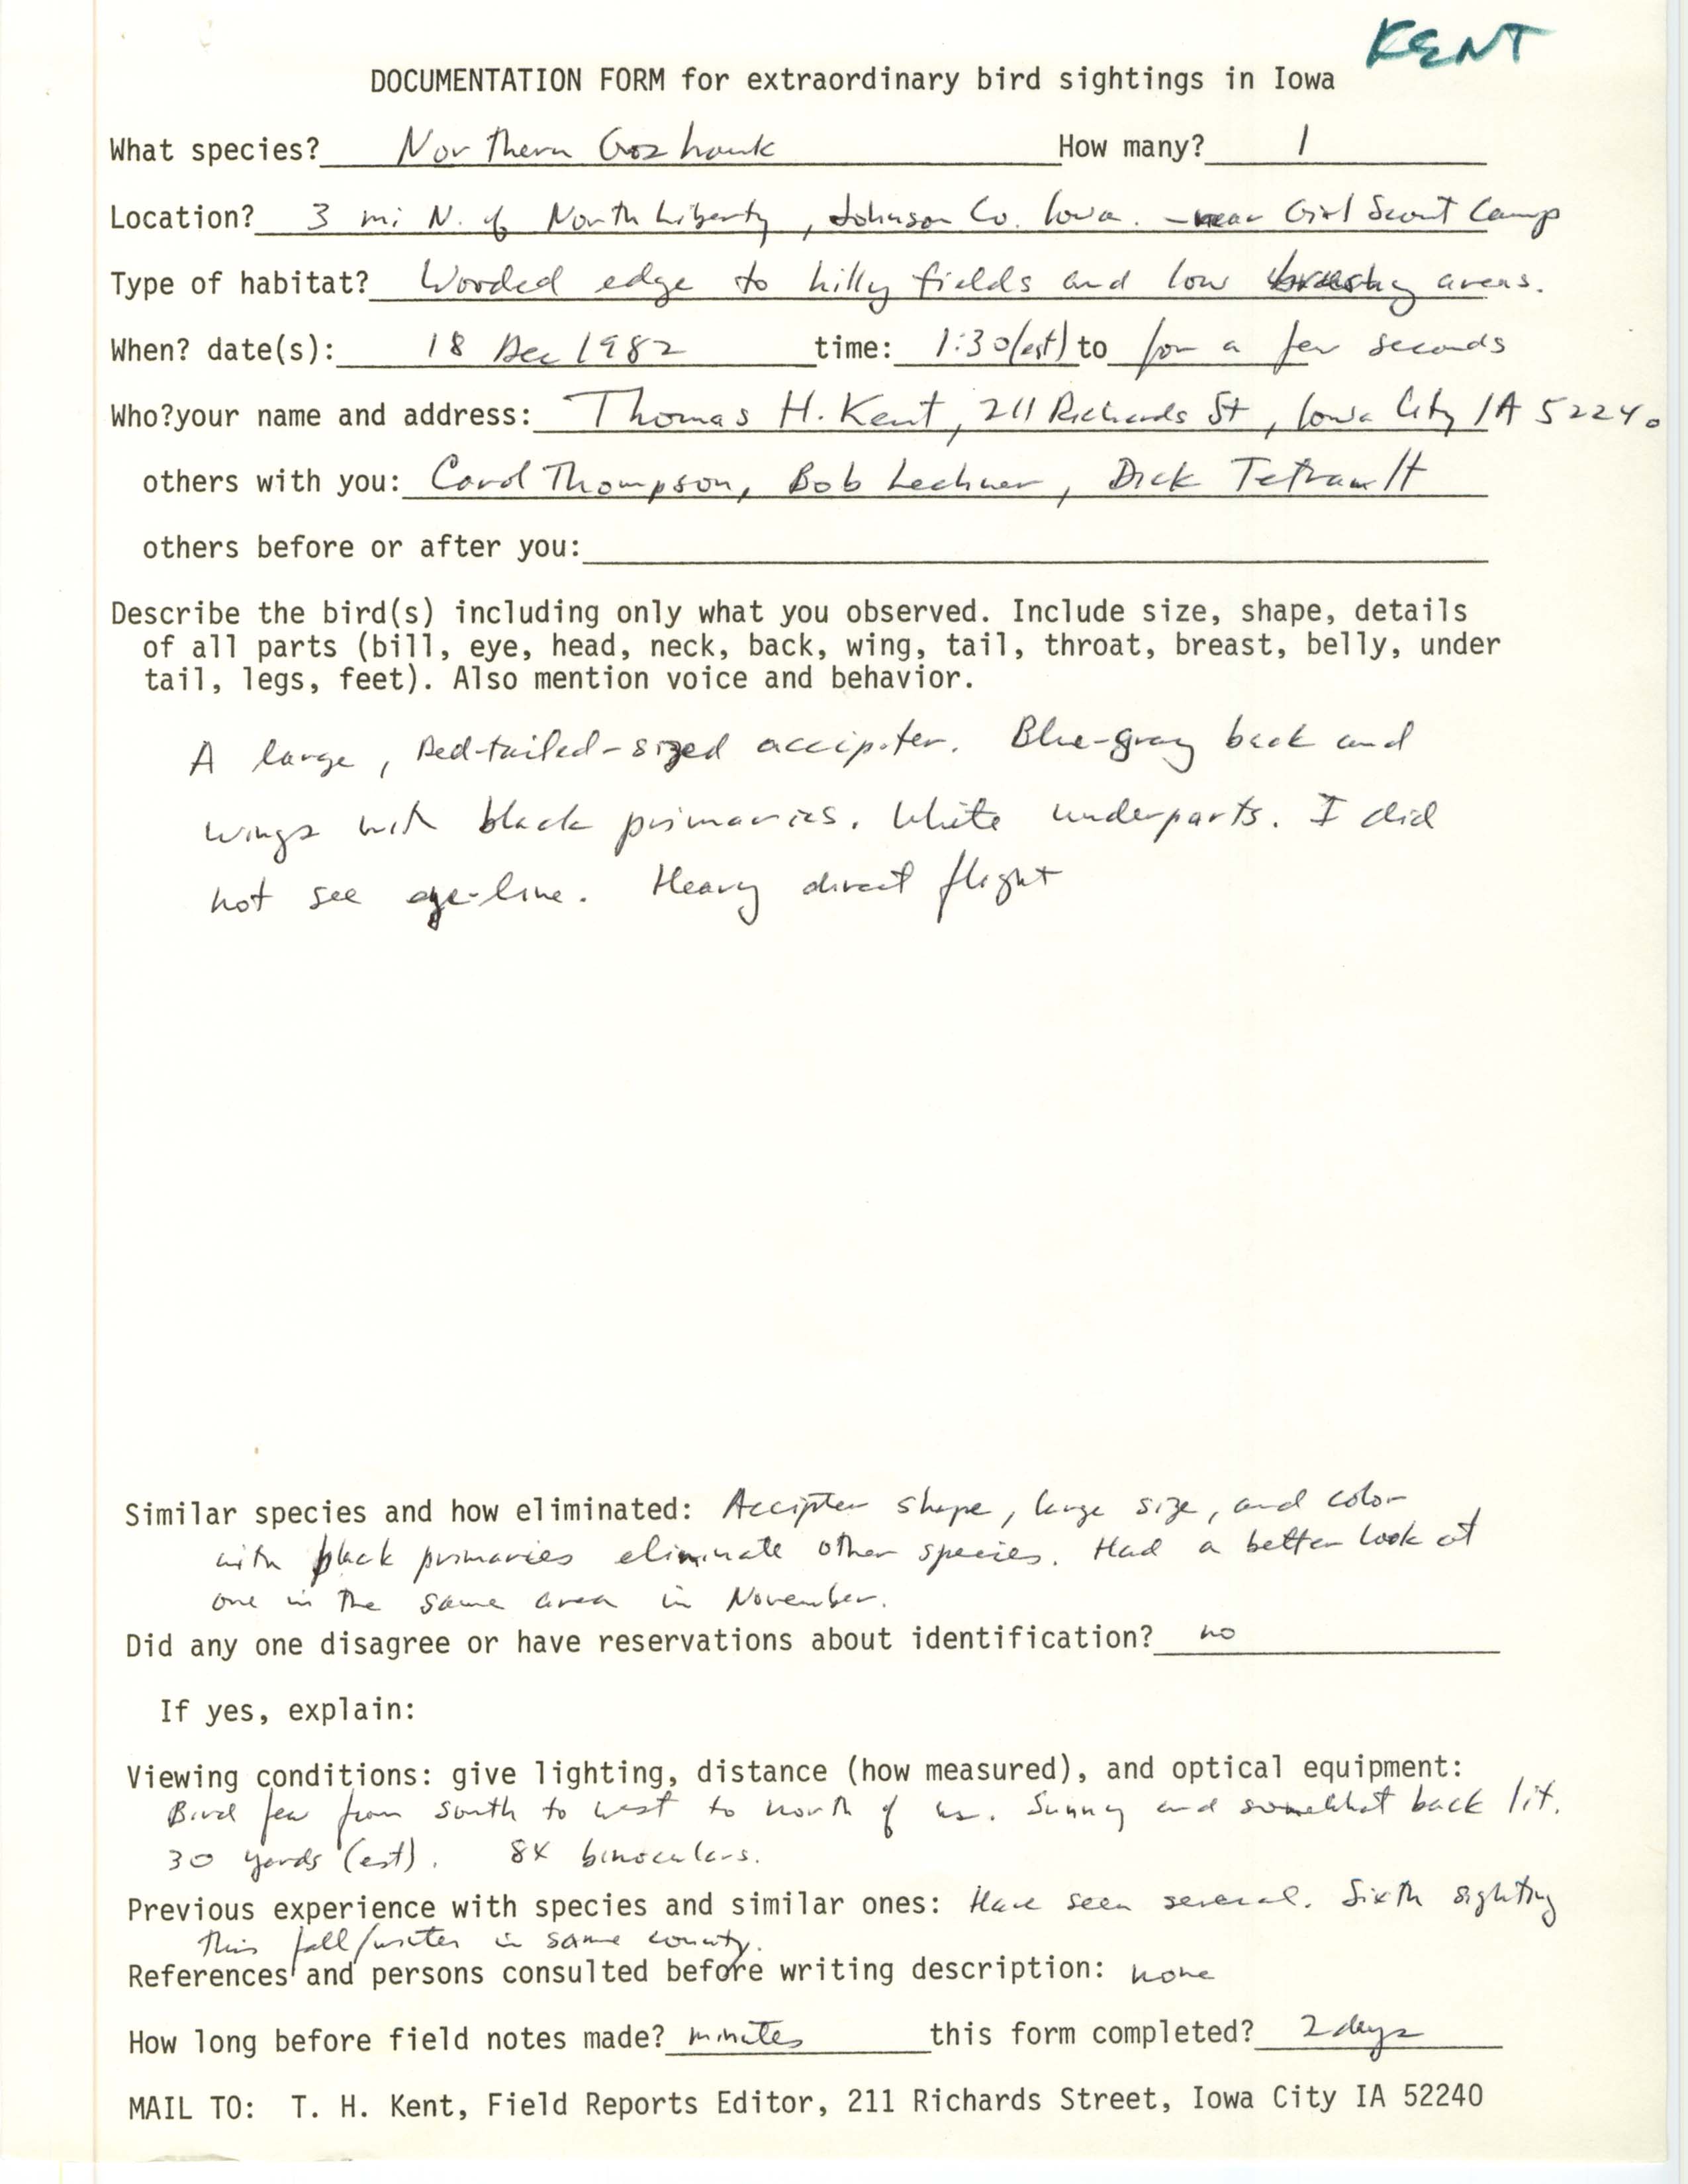 Rare bird documentation form for Northern Goshawk at North Liberty, 1982